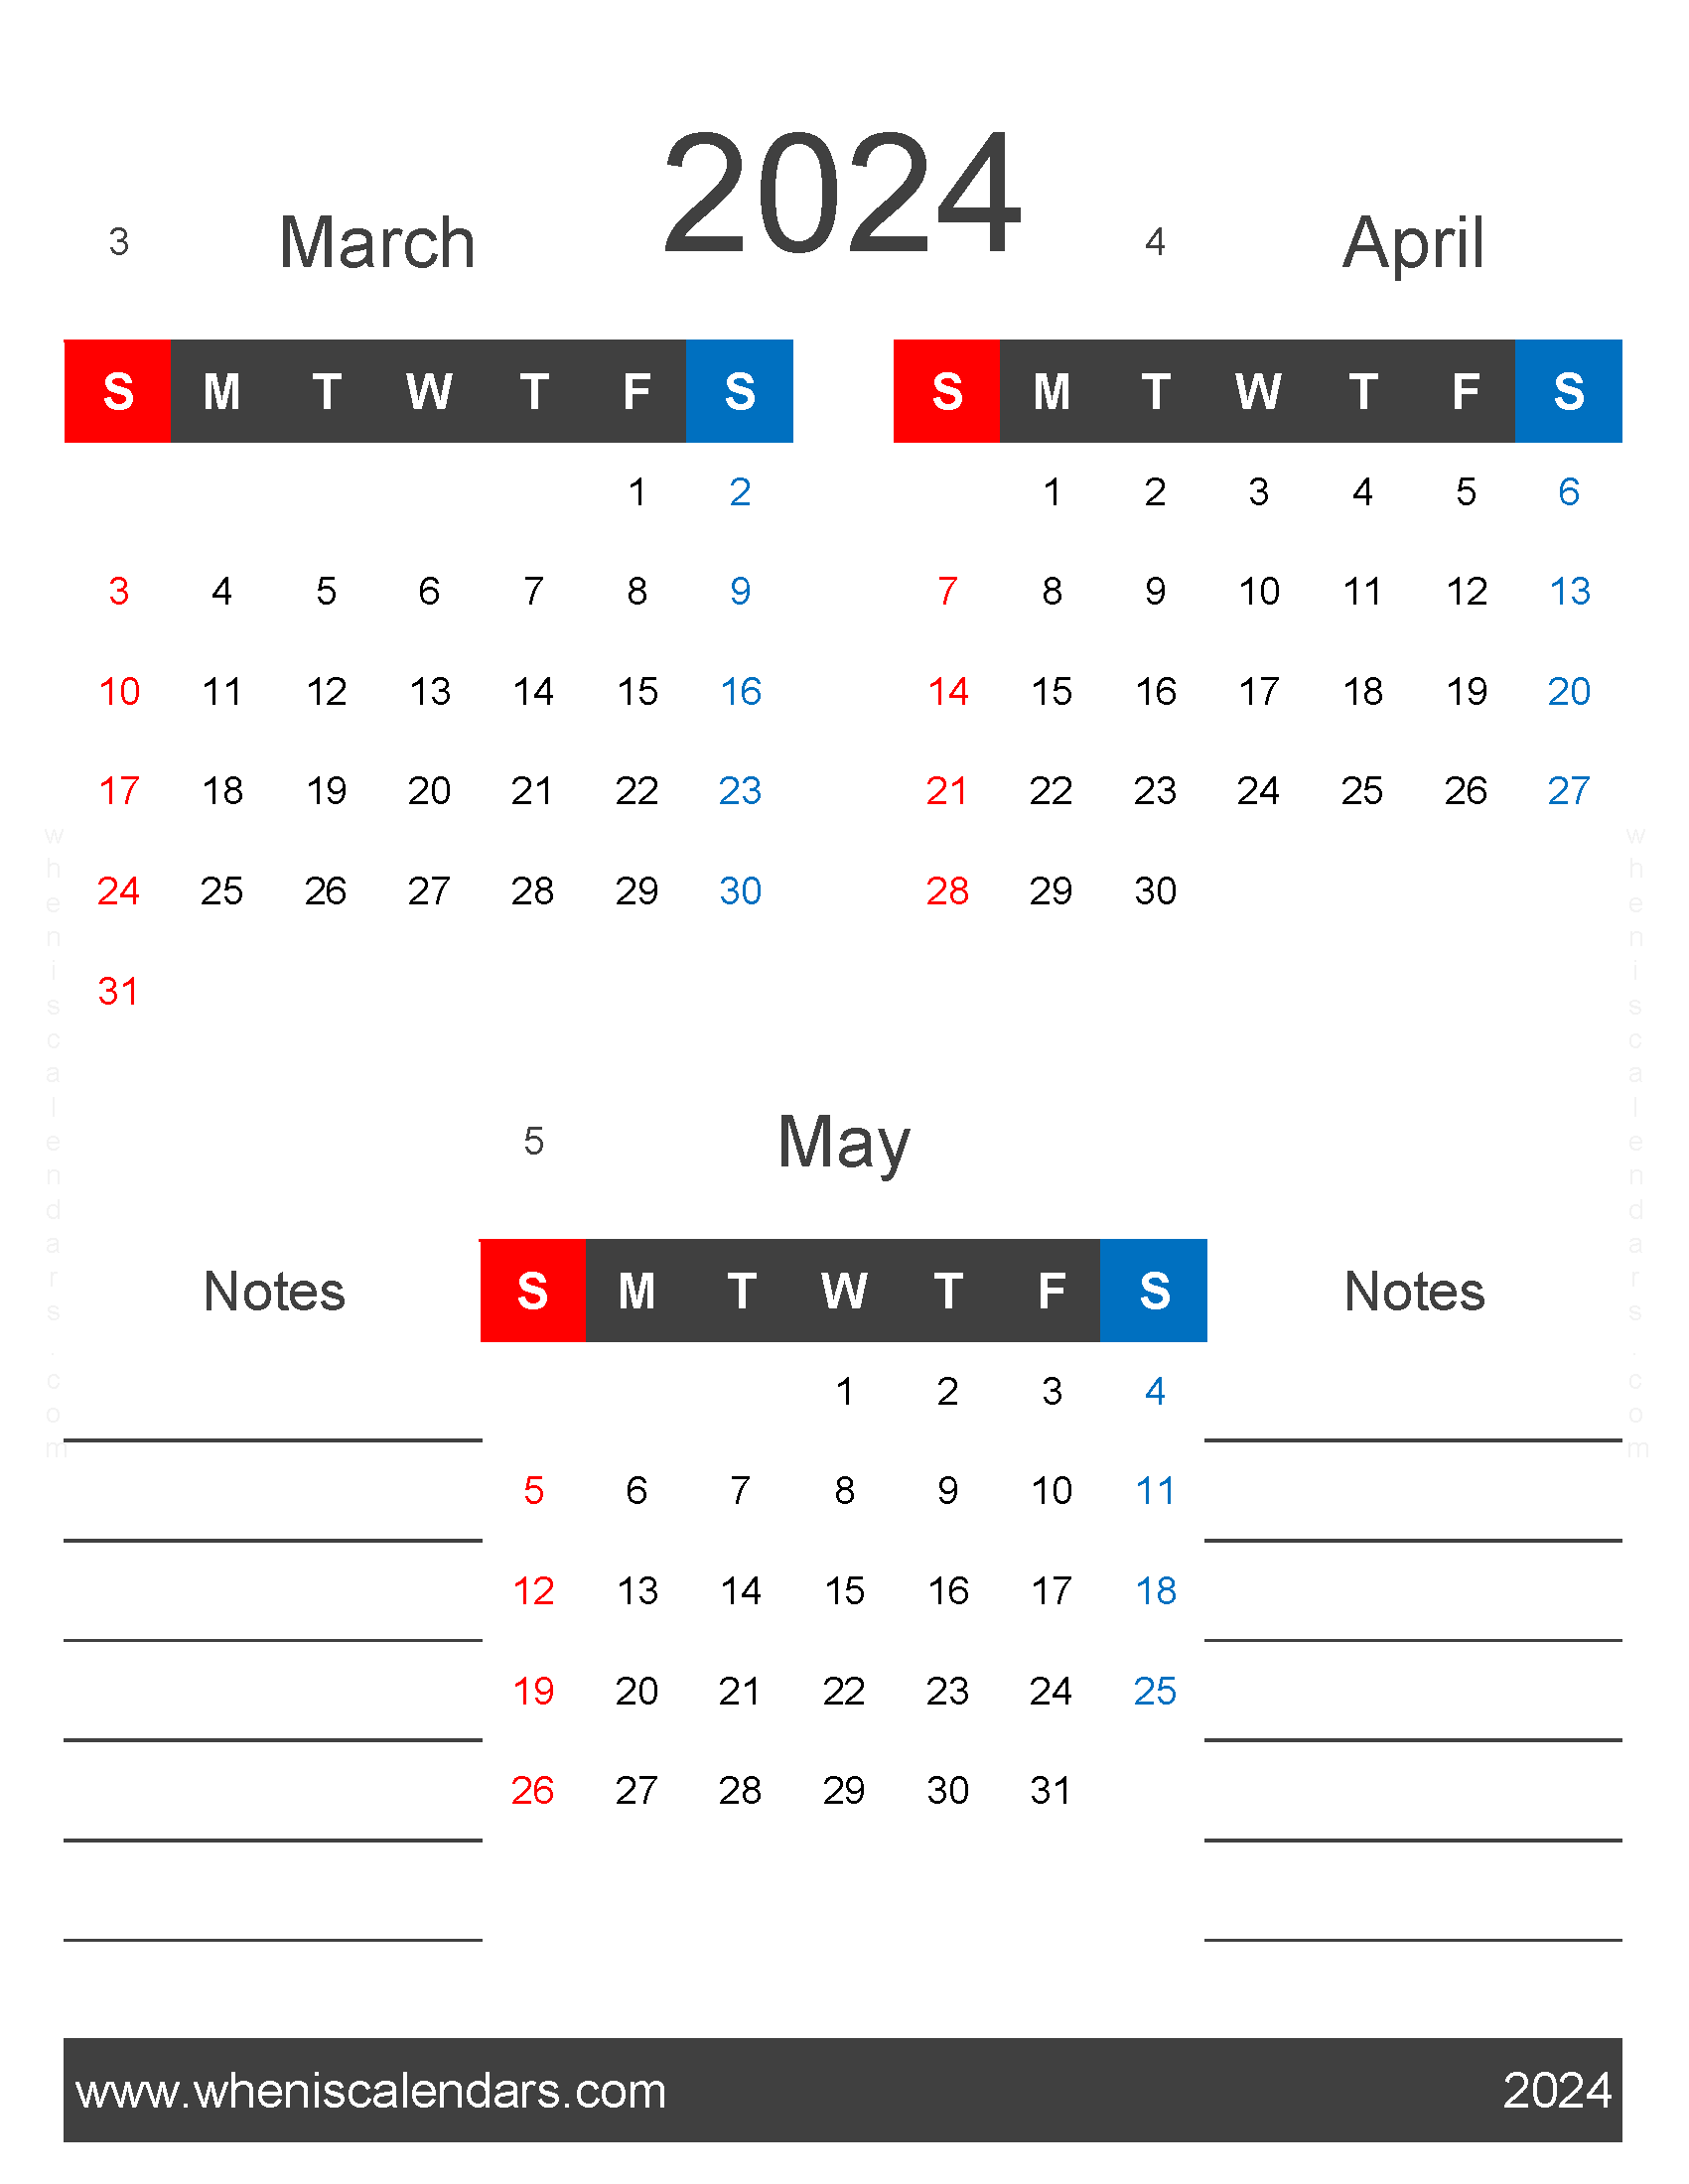 Download calendar 2024 Mar Apr May MAM463